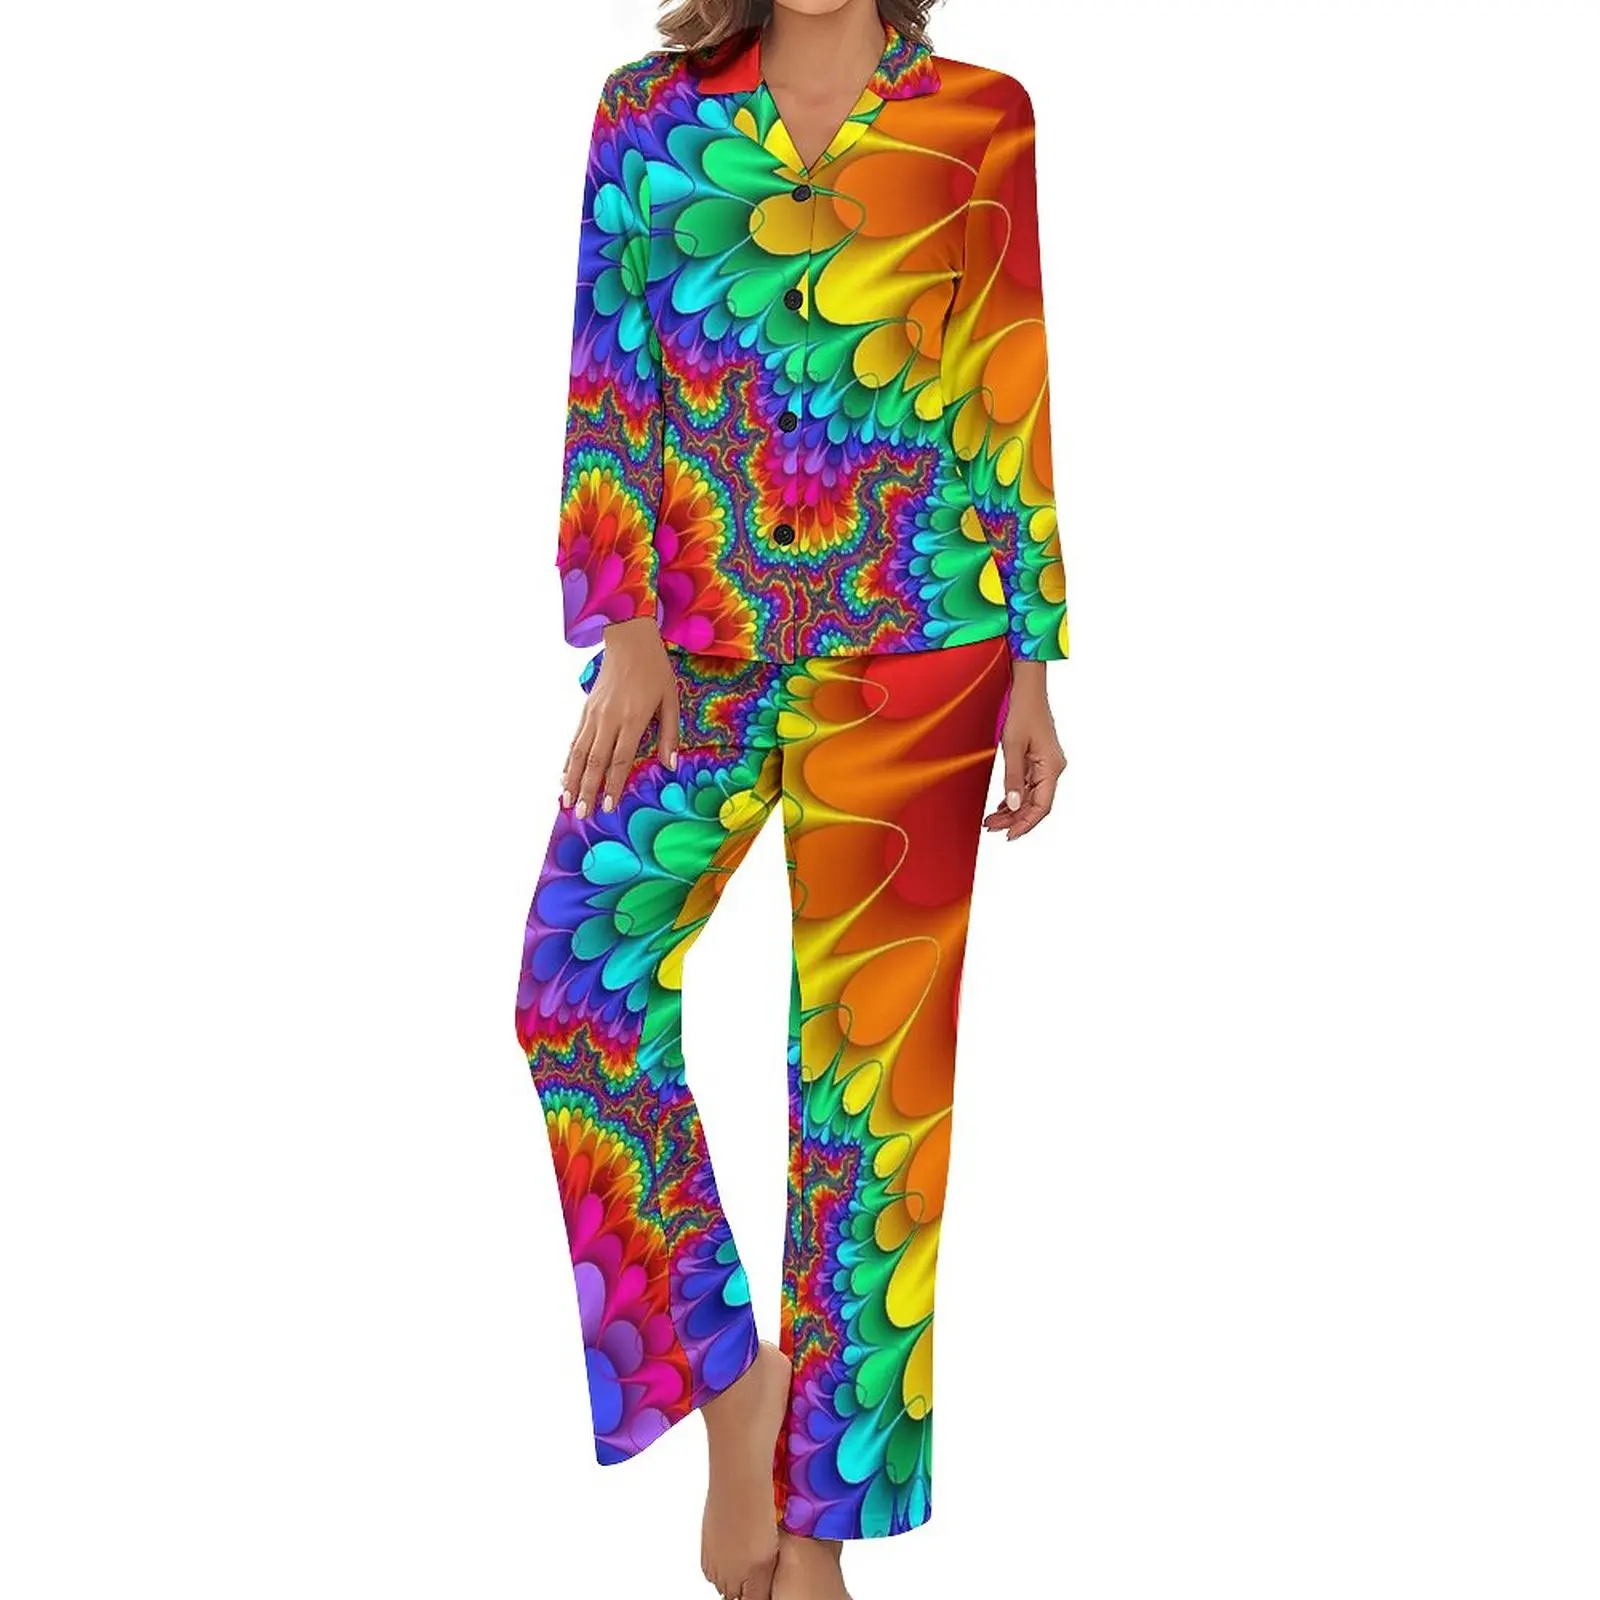 

Rainbow Splash Pajamas Psychedelic Print Long Sleeves Romantic Pajama Sets Two Piece Sleep Autumn Graphic Sleepwear Gift